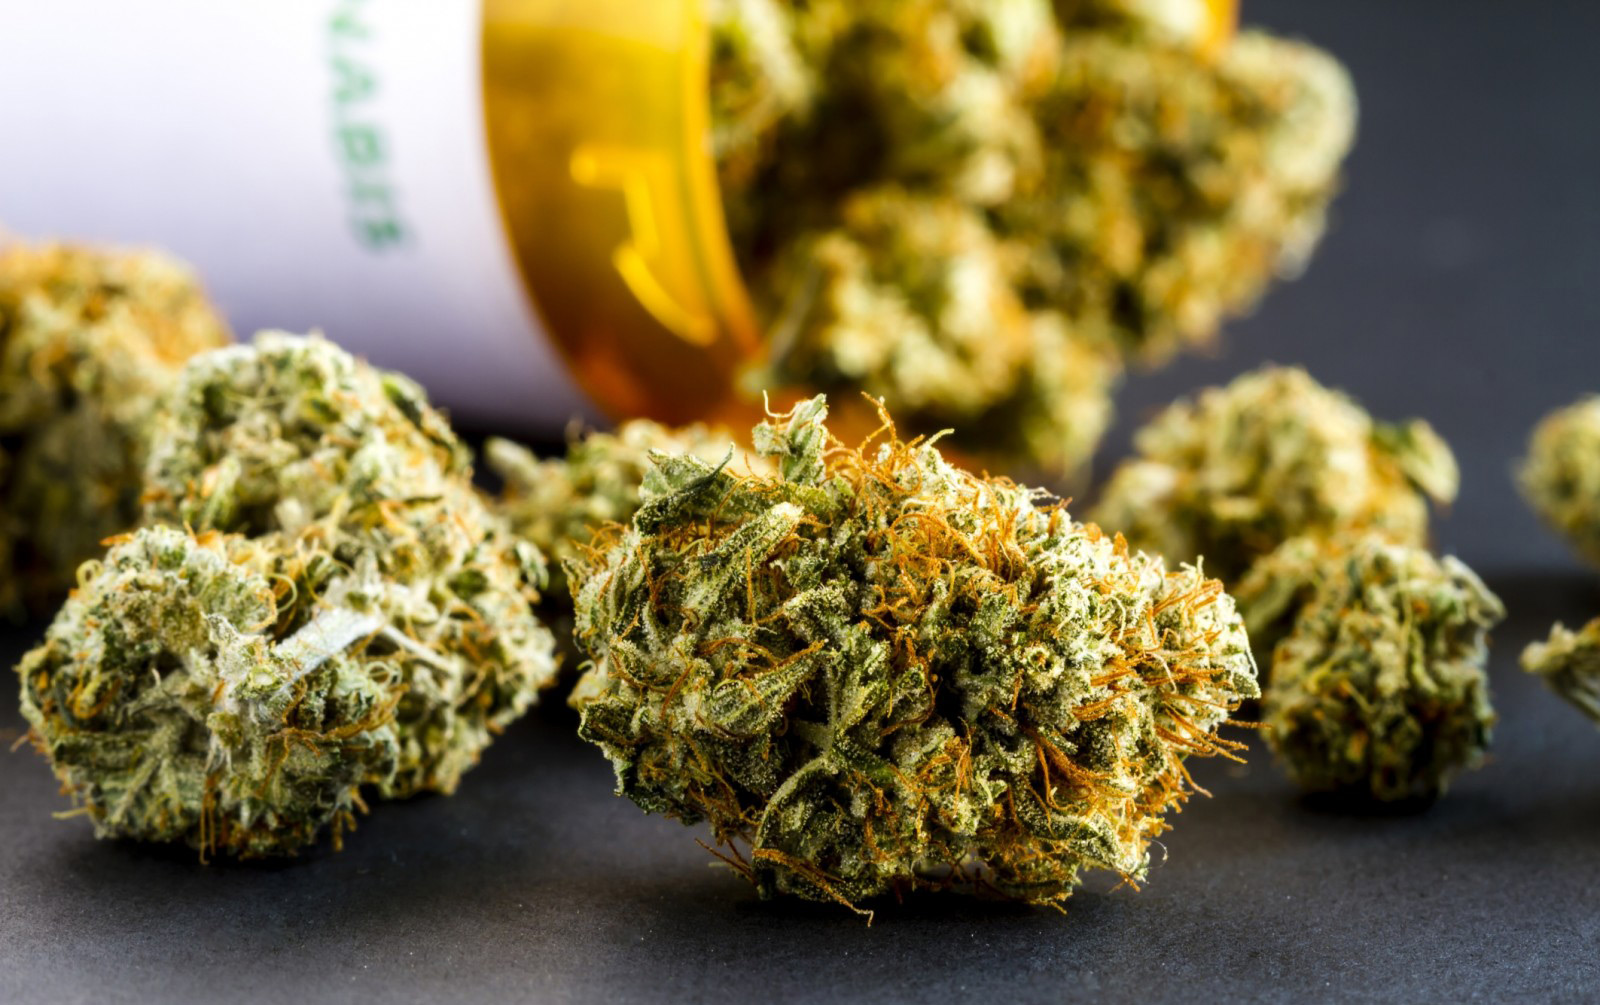 Wisconsin: Bill Filed To Regulate Marijuana Possession, Use, Sales